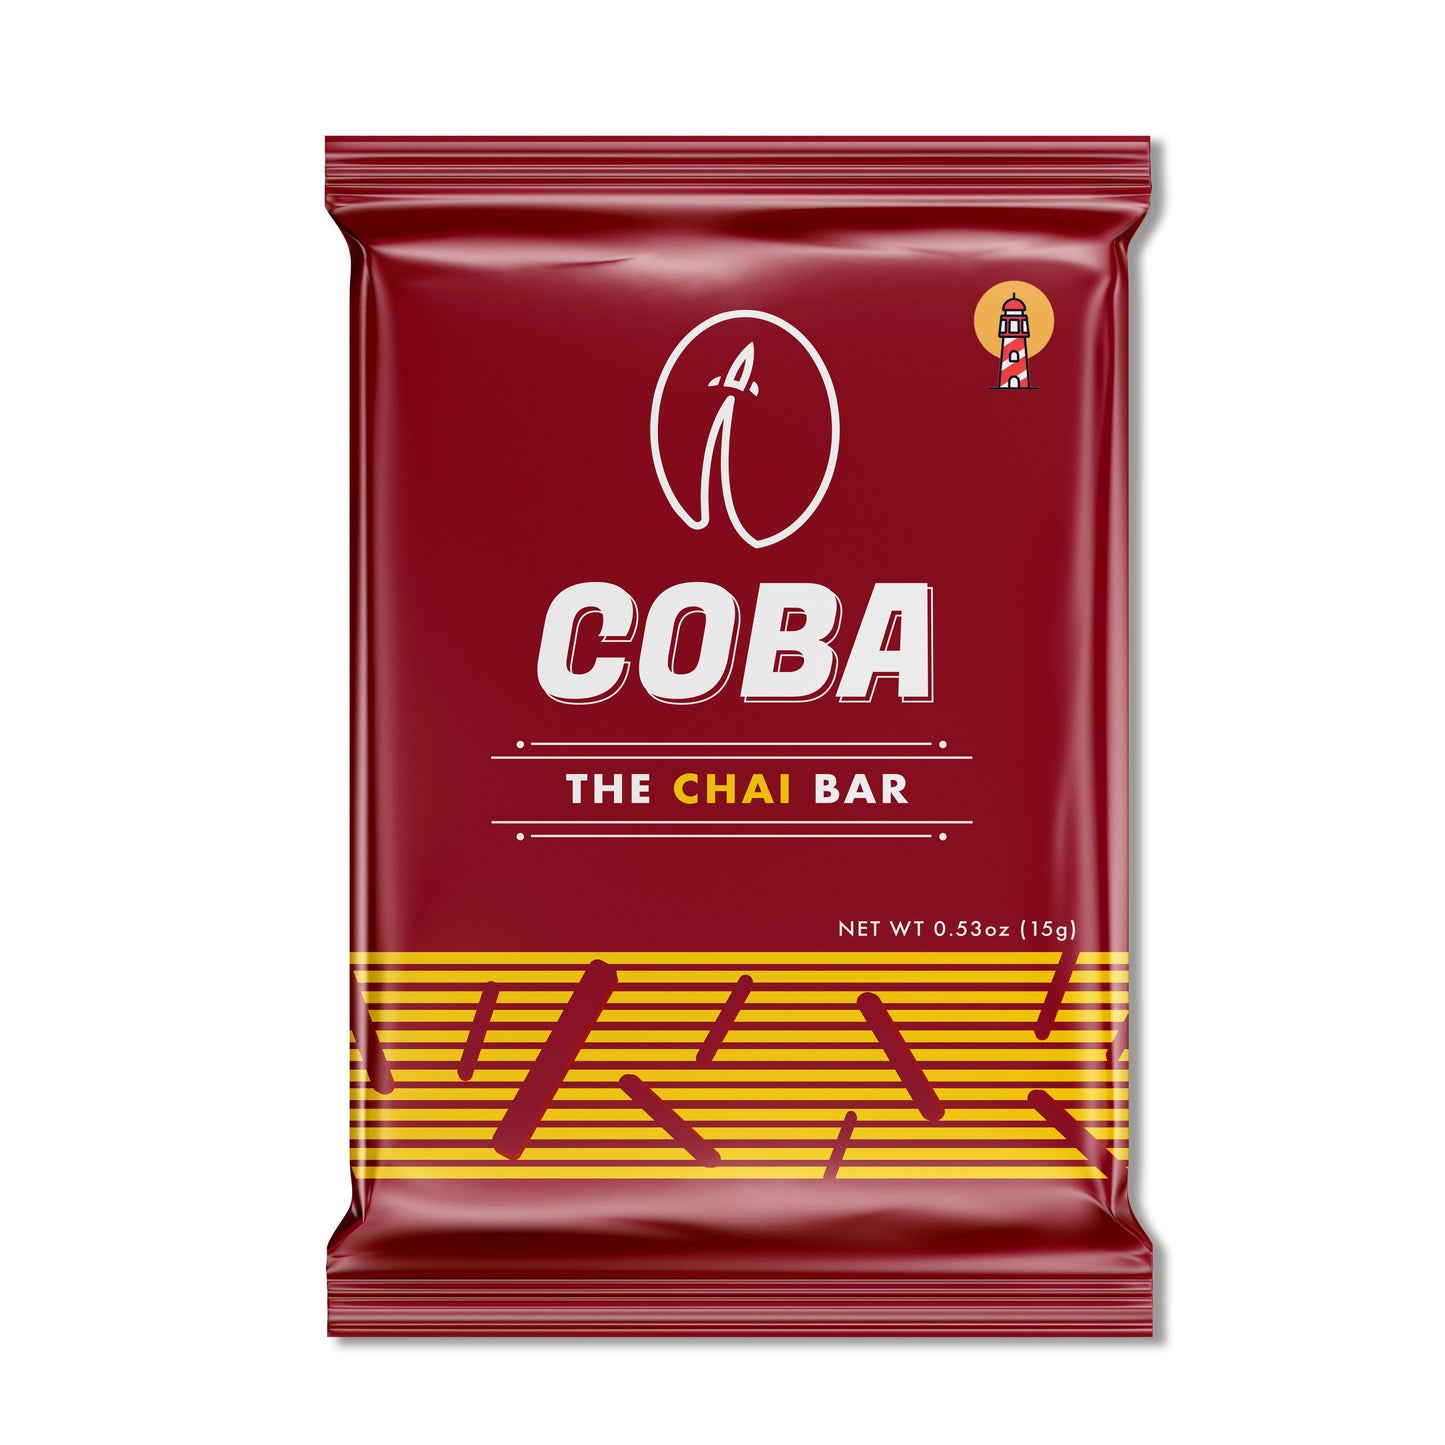 COBA, The Chai Bar (20 per case)